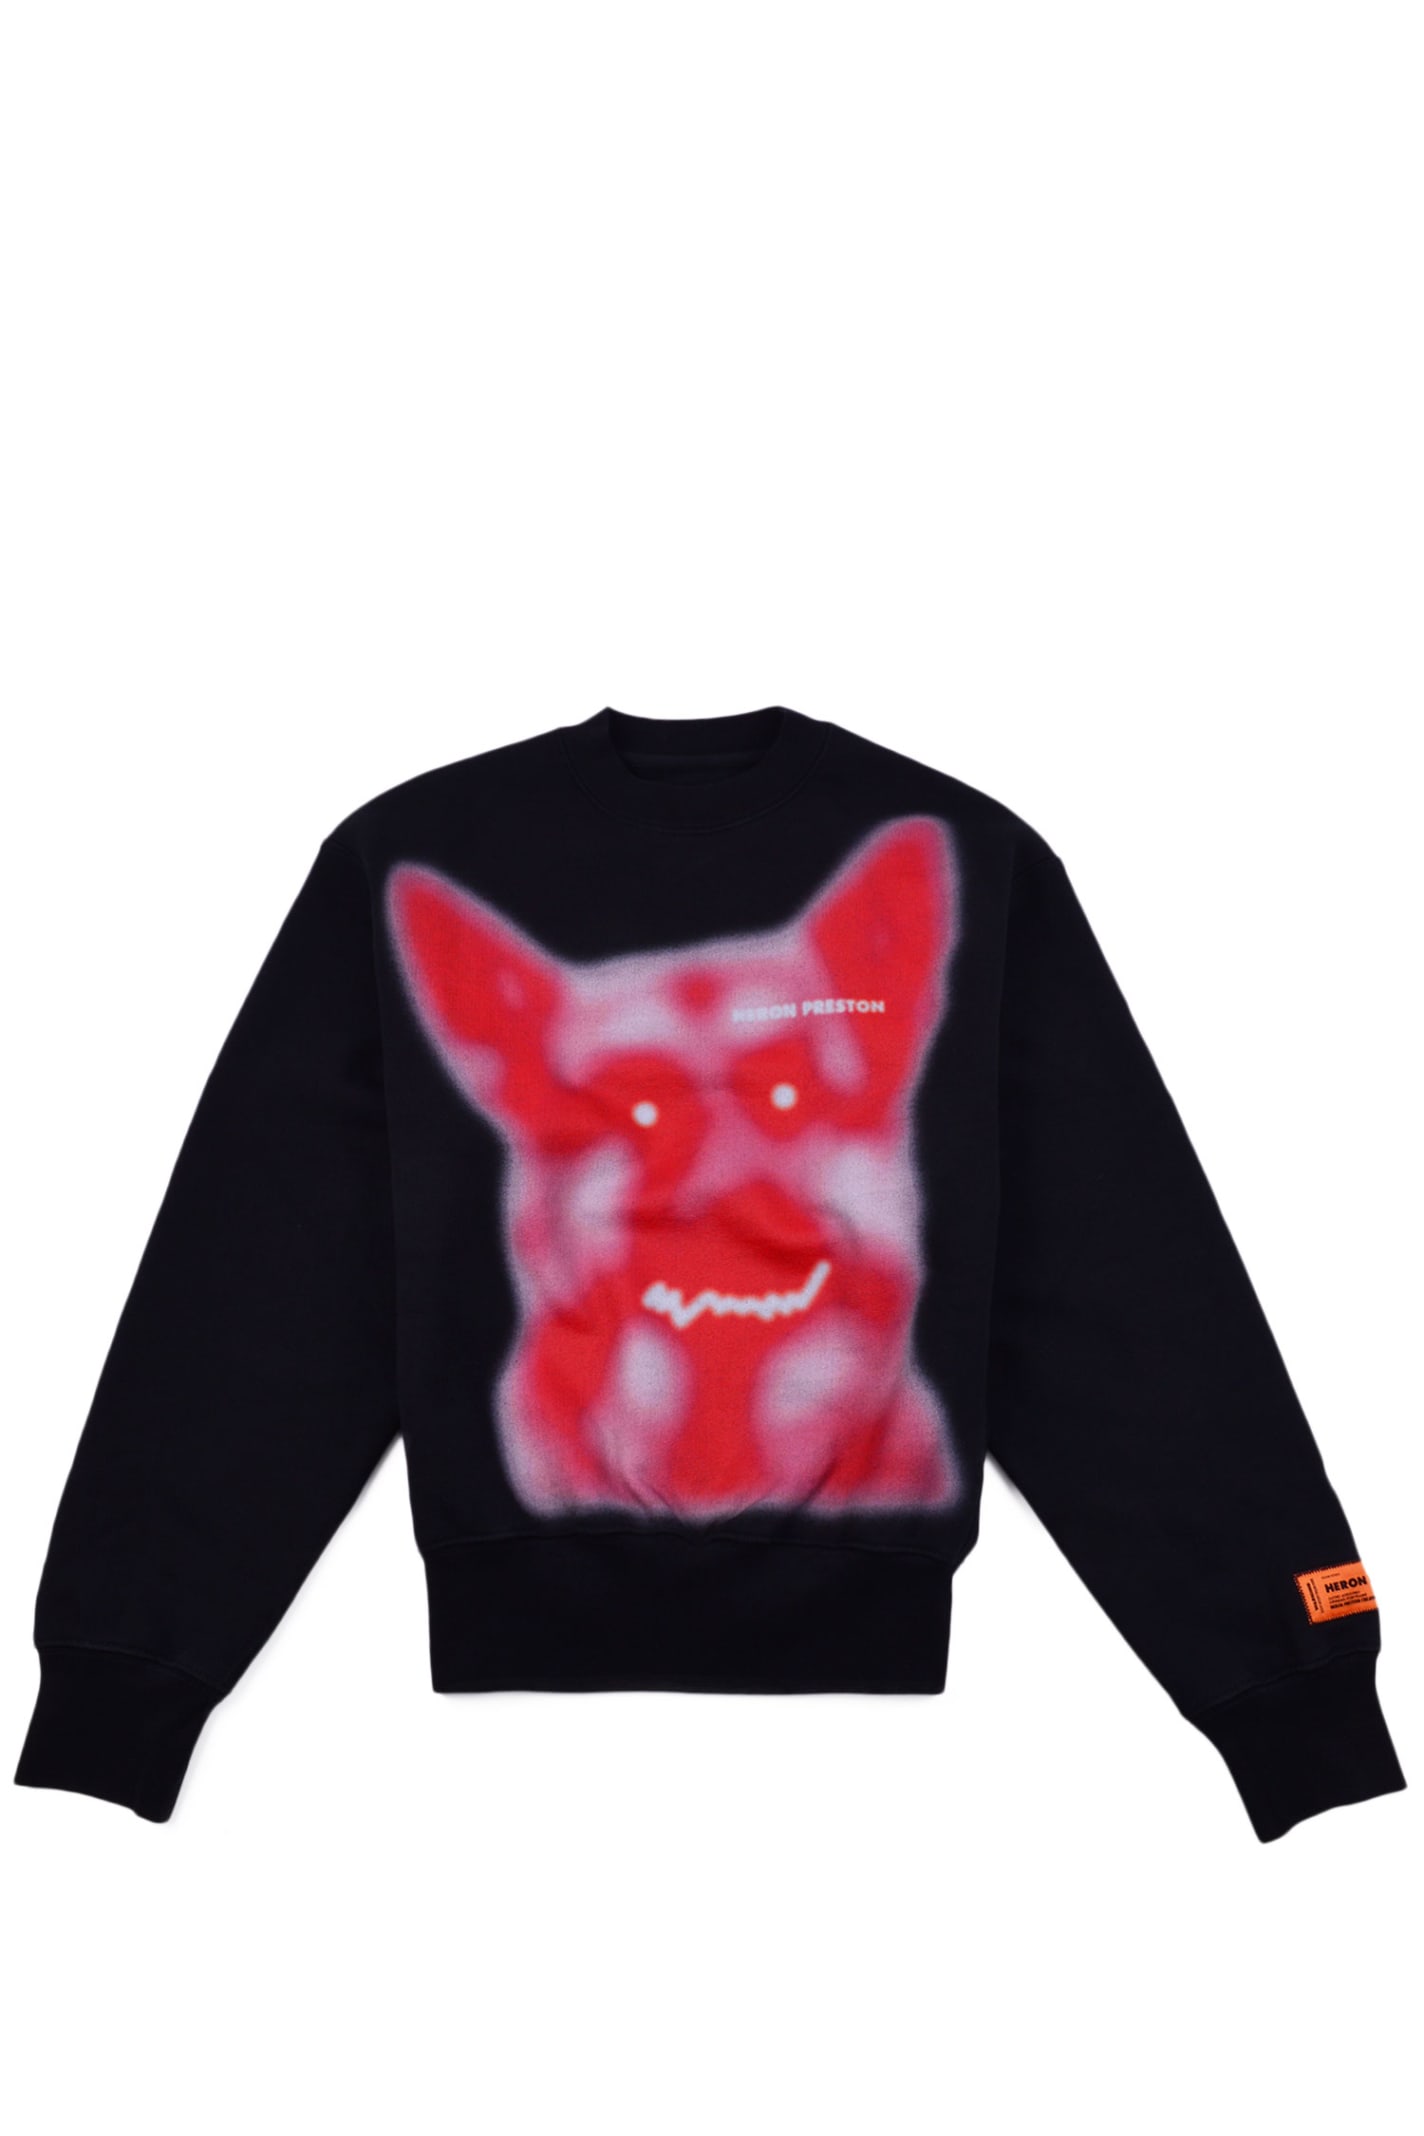 HERON PRESTON Beware Of Dog Jersey Sweatshirt